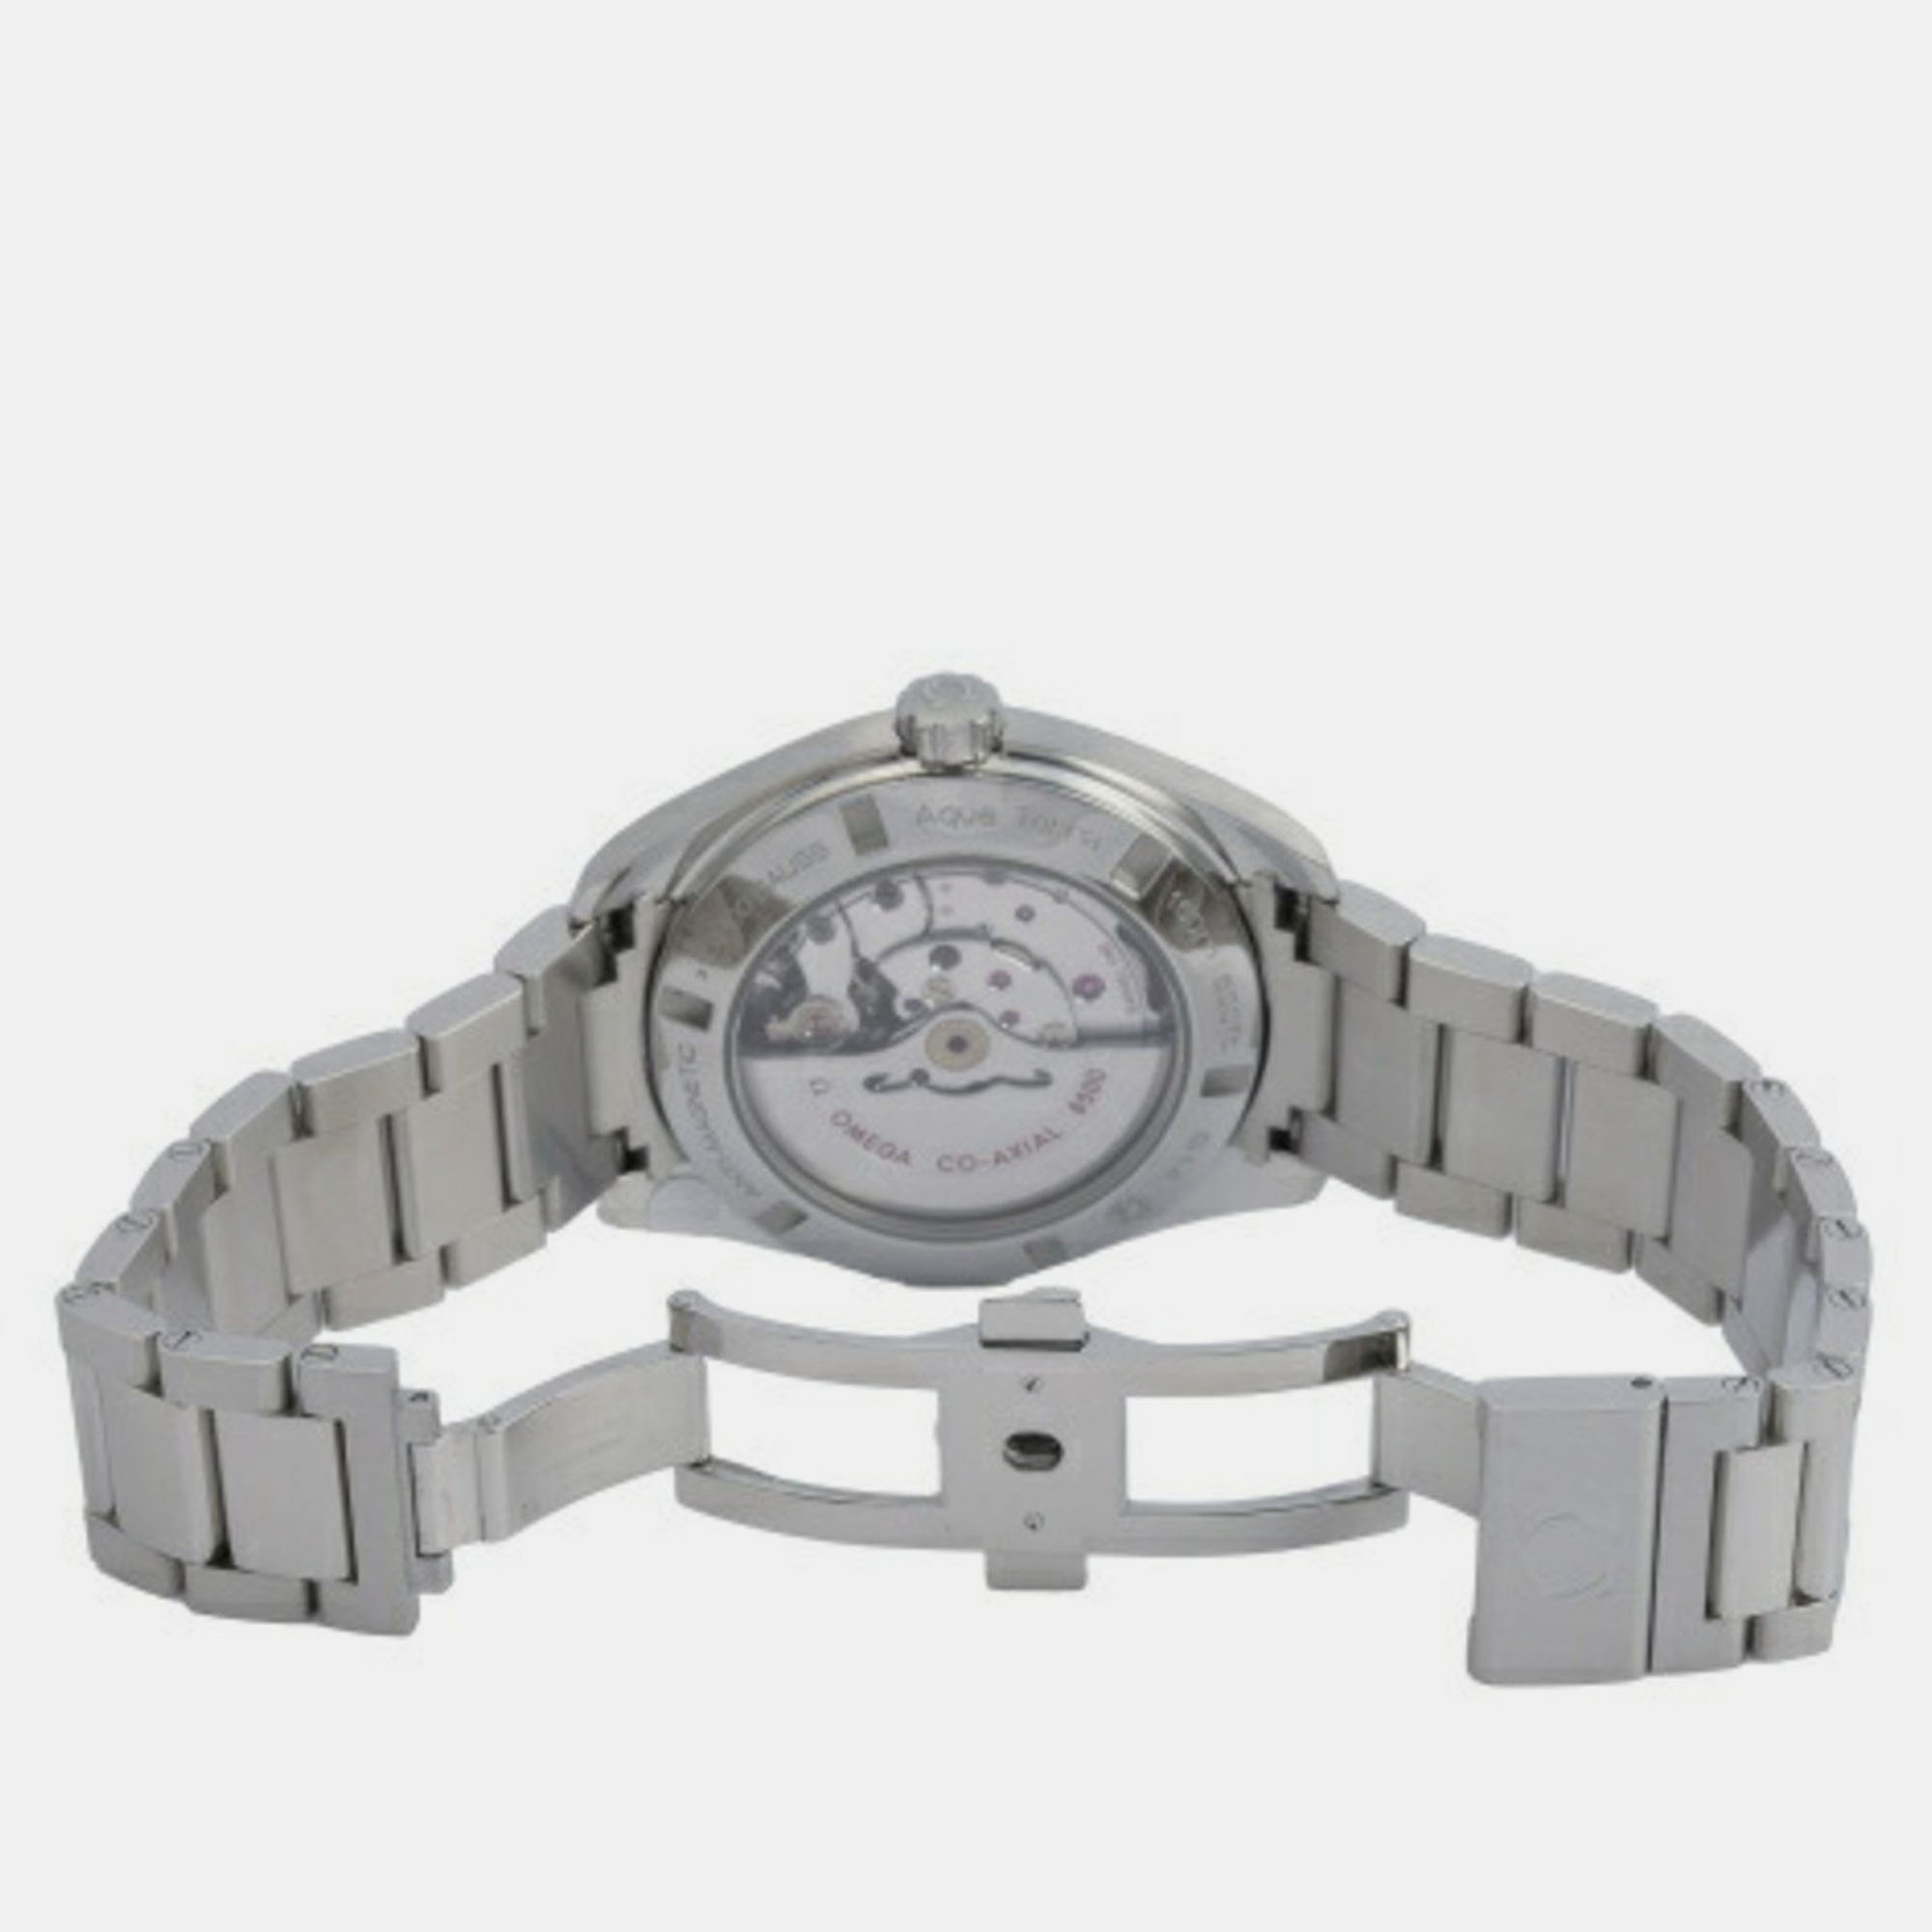 Omega Blue Stainless Steel Seamaster Aqua Terra 231.10.42.21.03.006 Automatic Men's Wristwatch 41.5 Mm